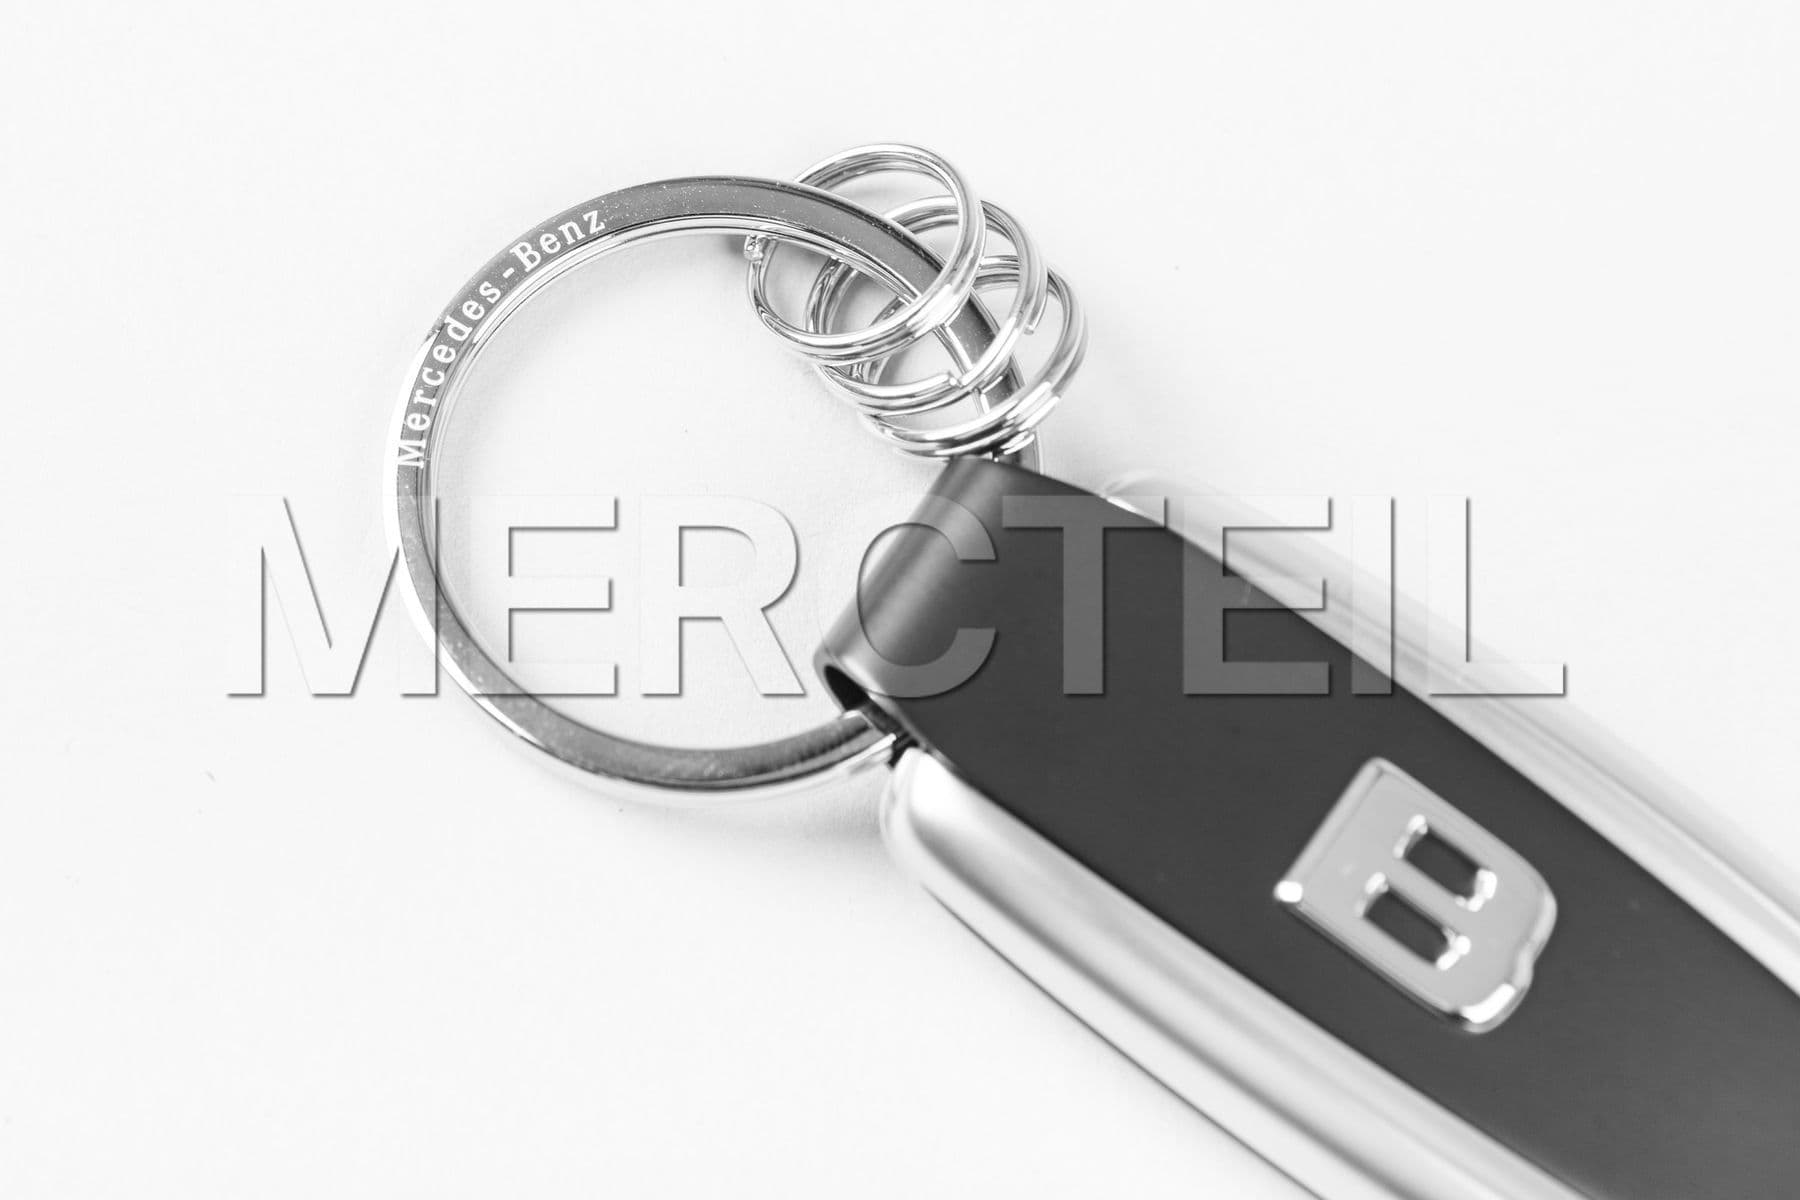 Mercedes-Benz Keychain, B-Class, black/silver